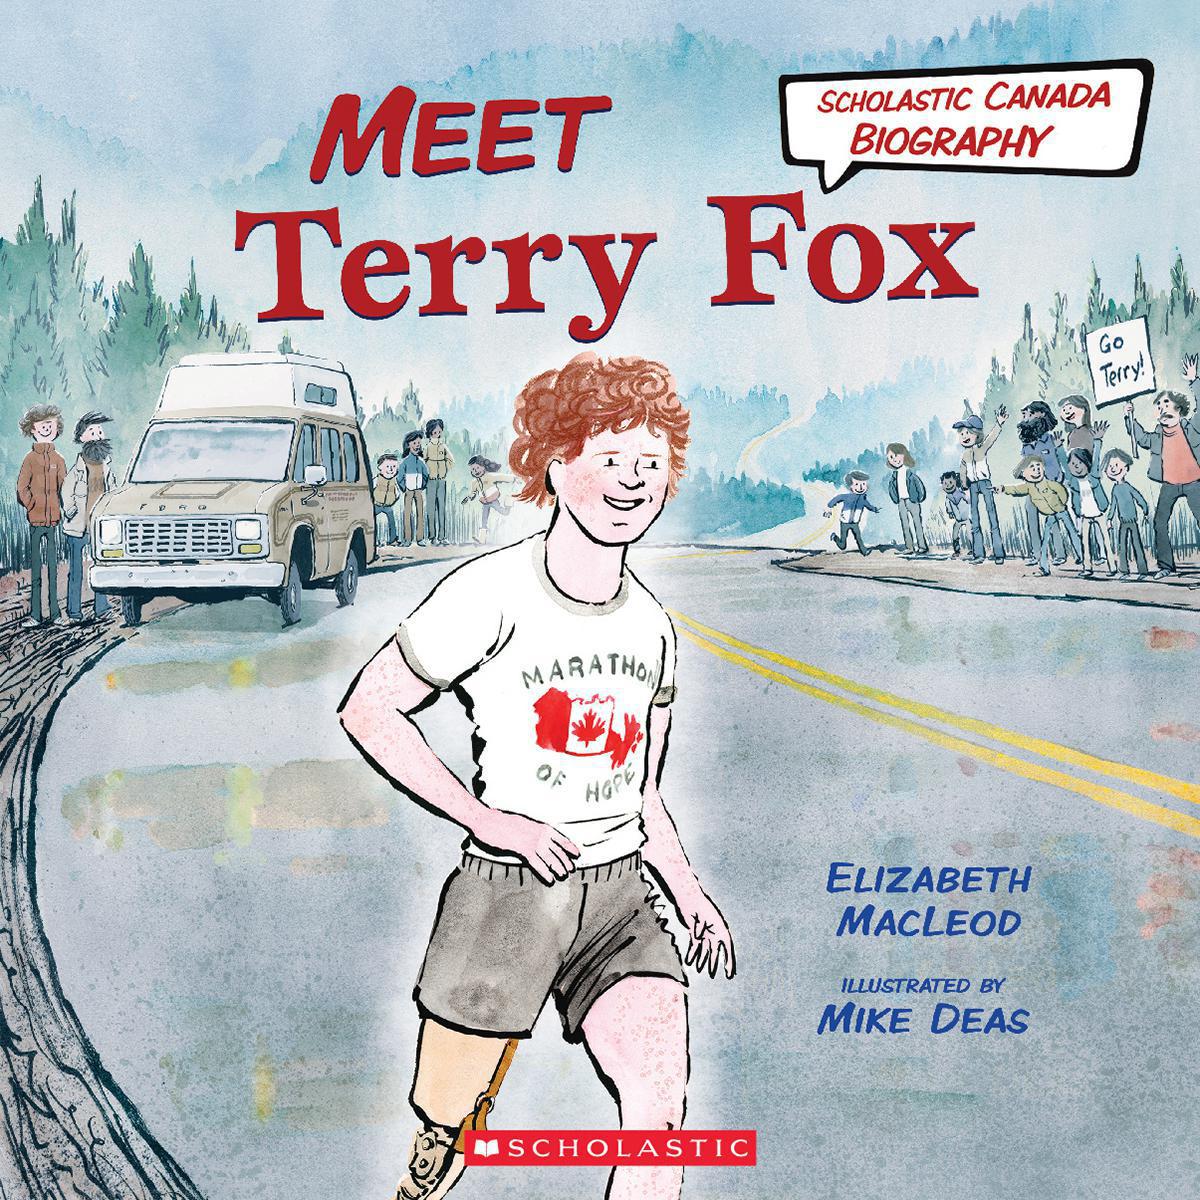  Scholastic Canada Biography: Meet Terry Fox 